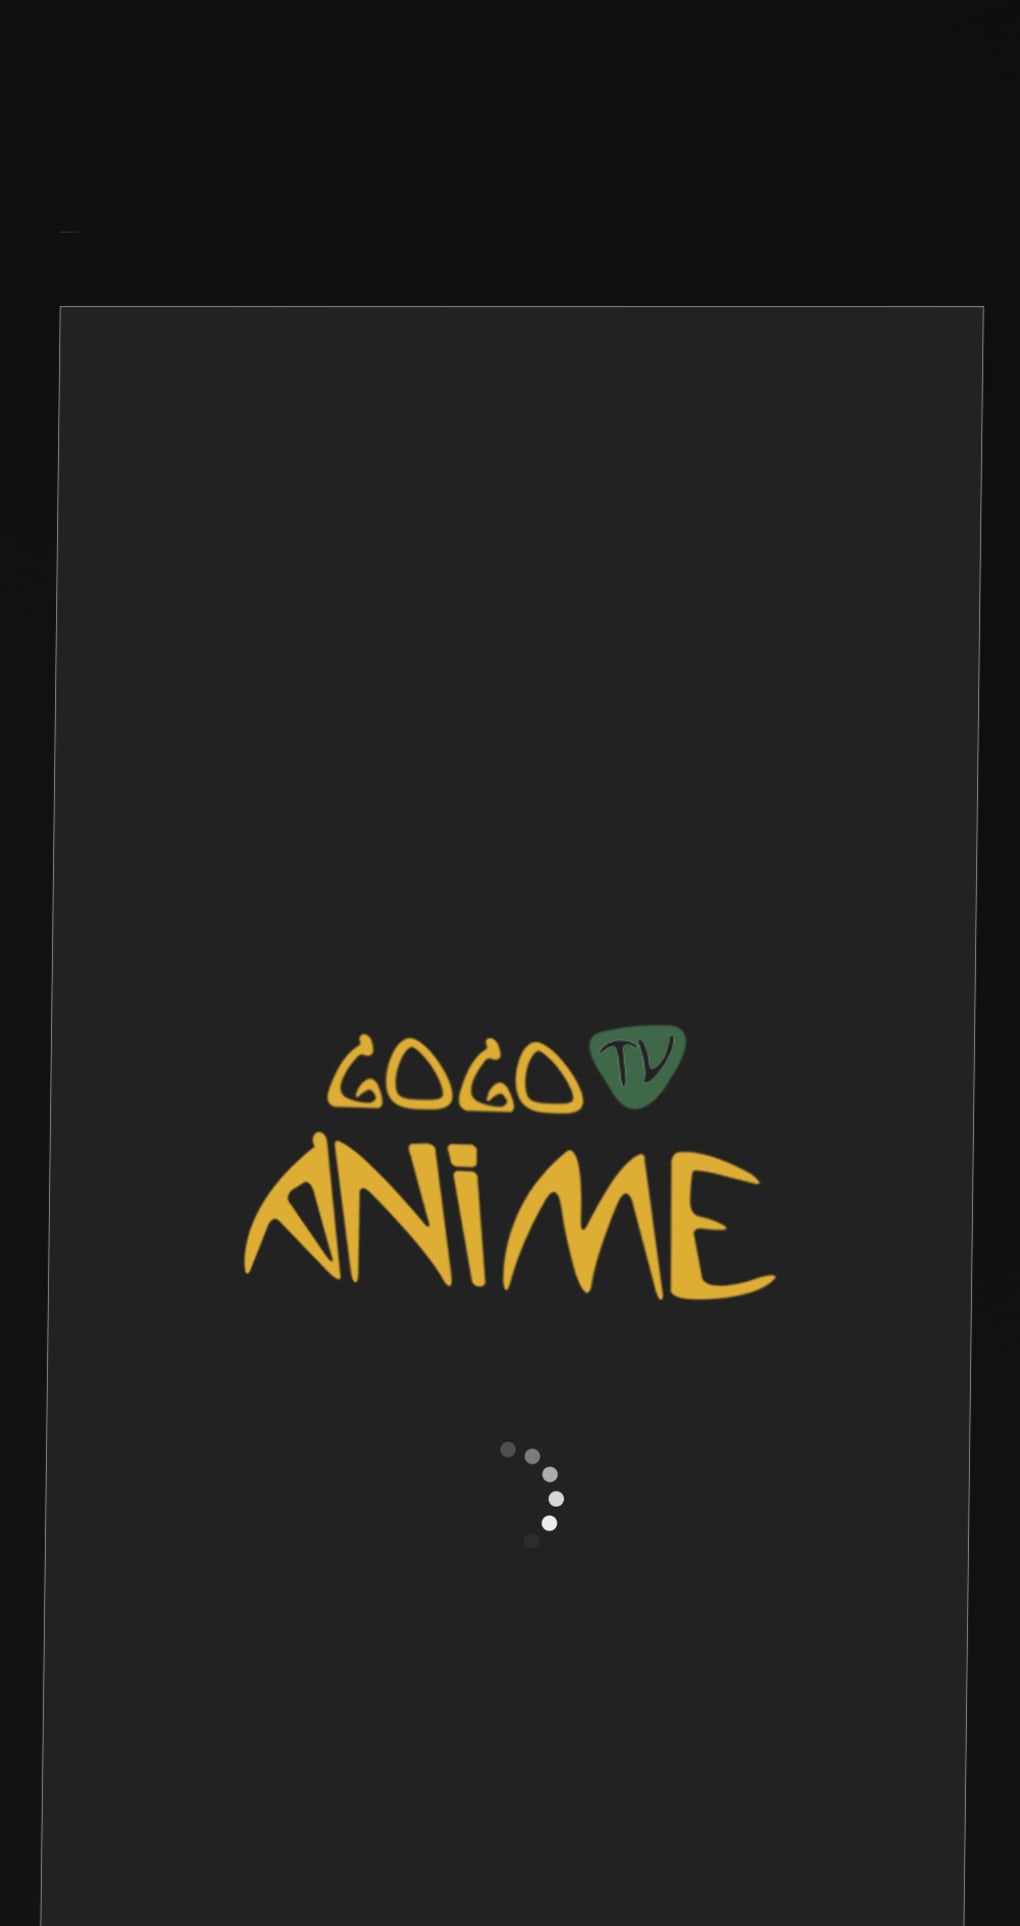 GogoAnime - Anime Online APK (Android App) - Free Download